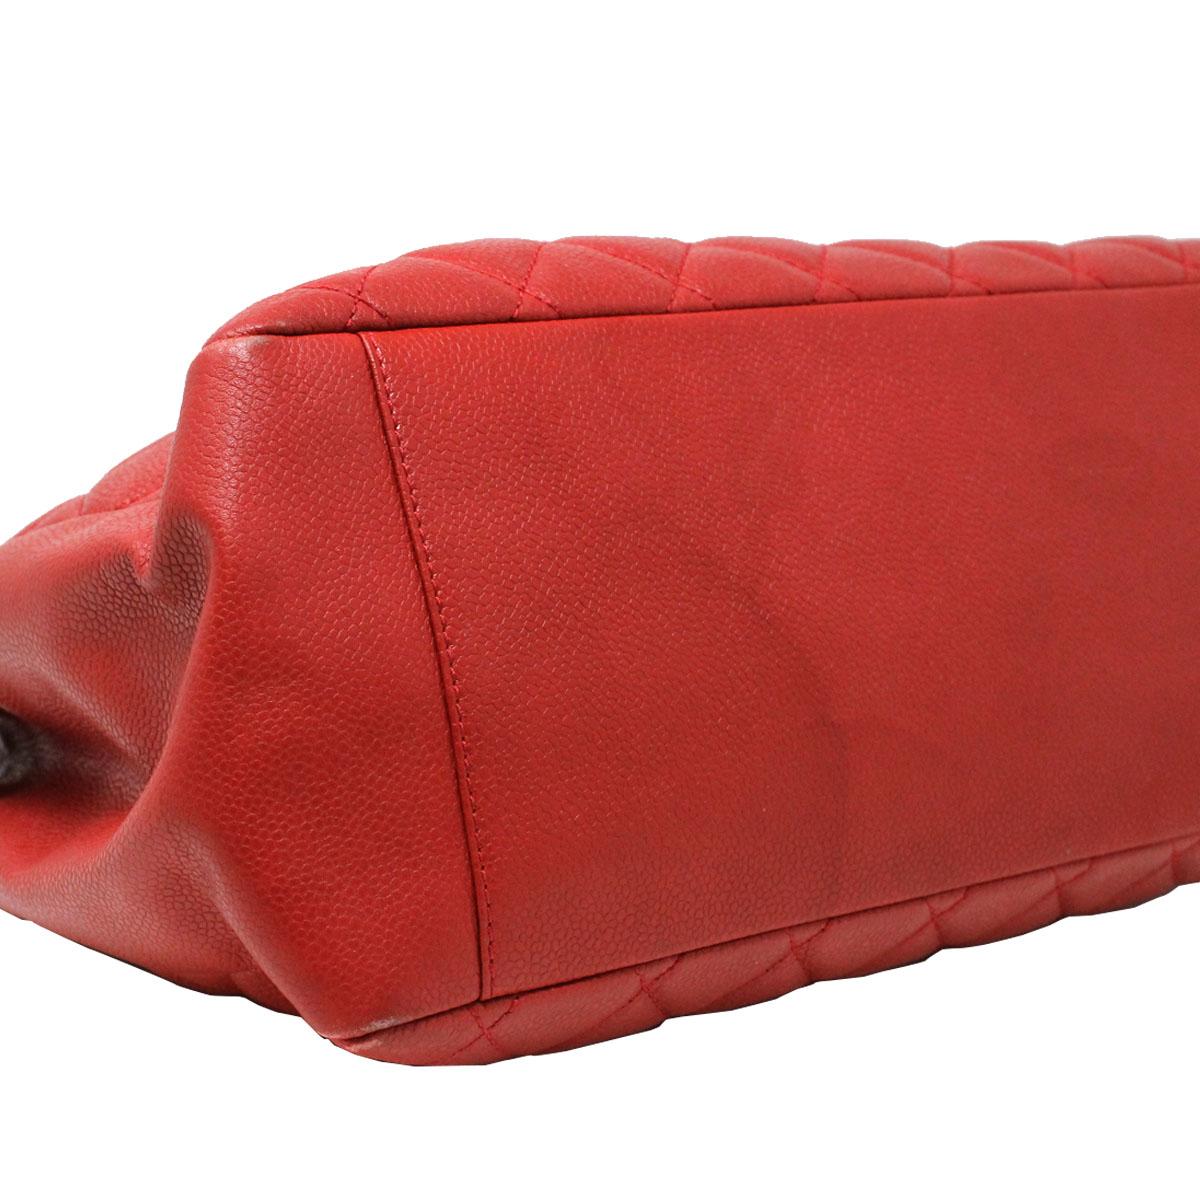 Chanel Grand Shopper Tote GST Red Caviar Leather Shoulder Bag no. 15 3